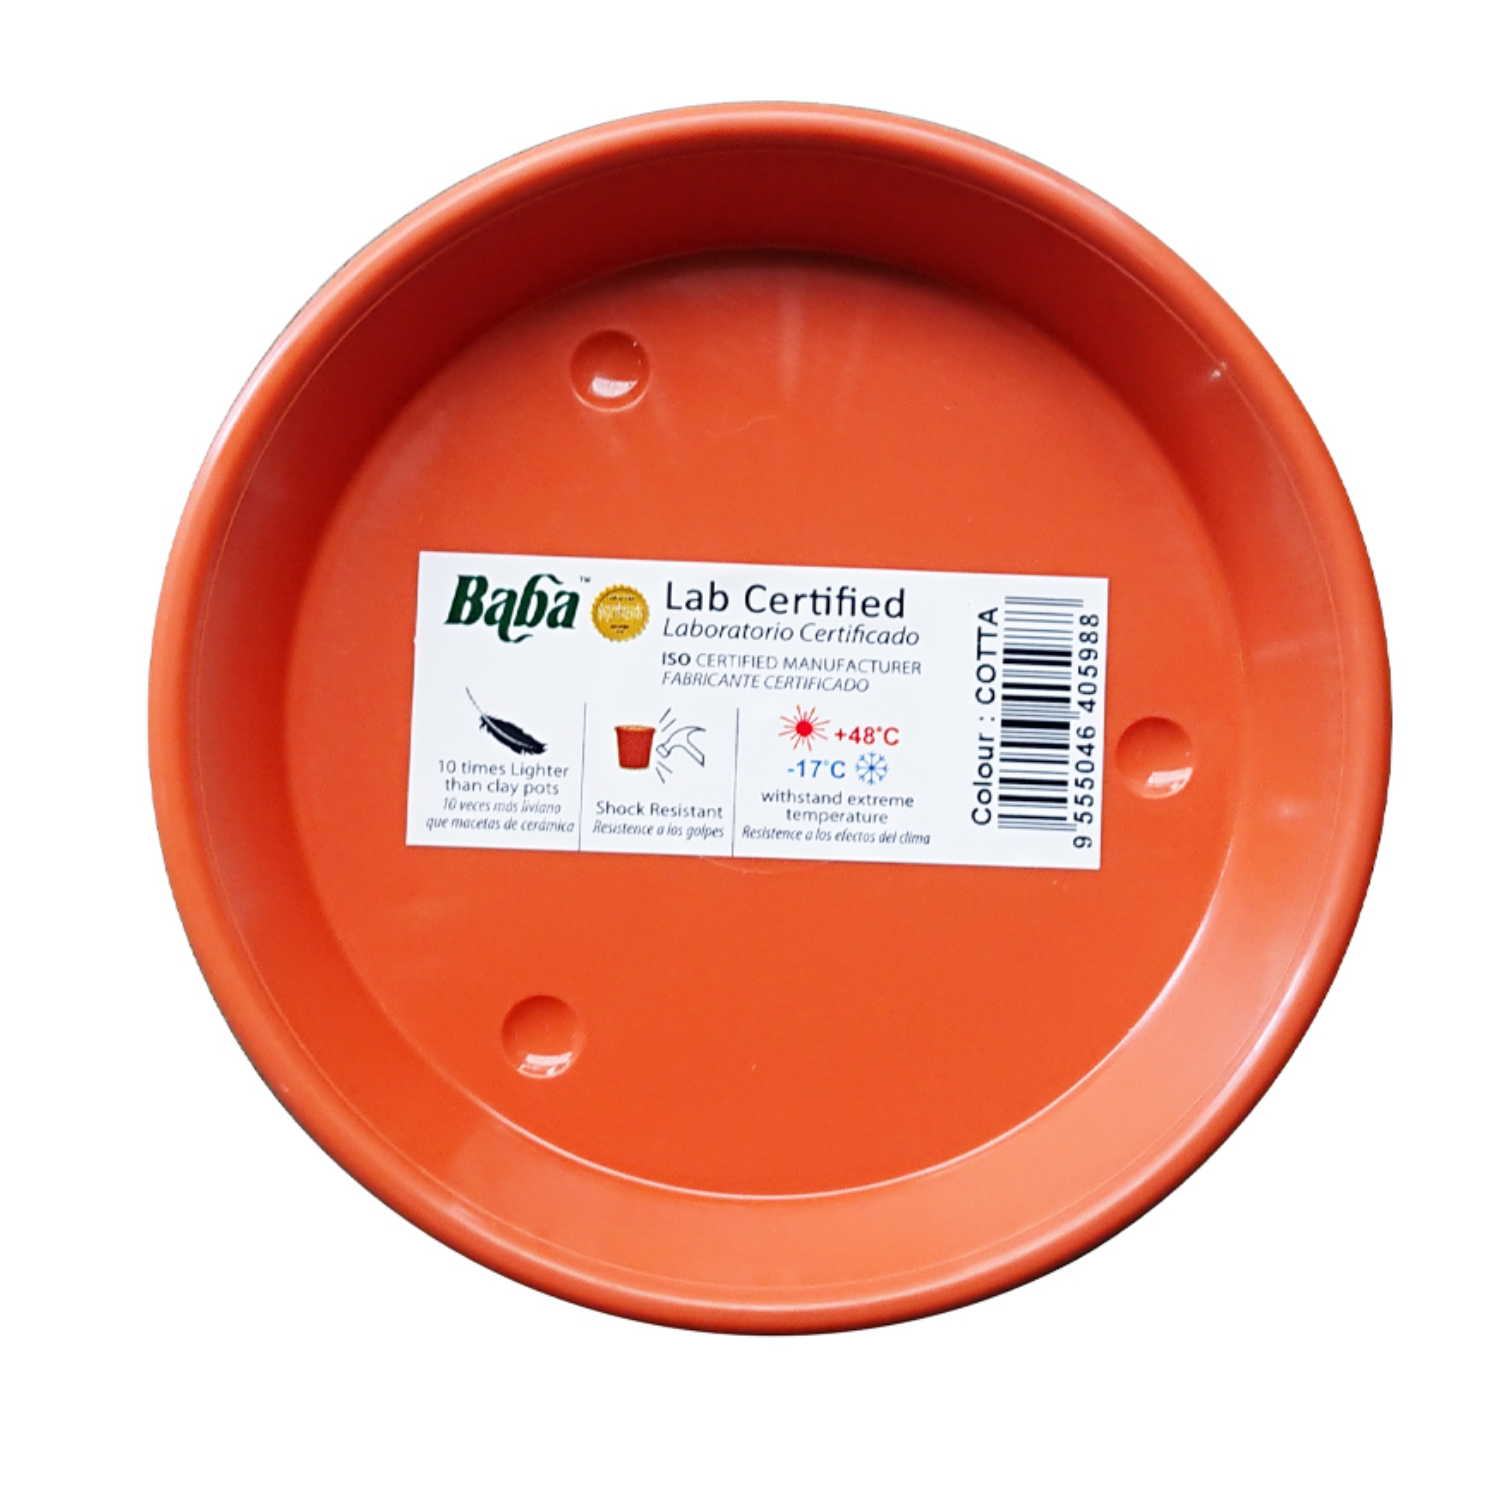 Baba 918 Plastic Saucer (COTTA) 11.9CM DIA x 2CM HEIGHT